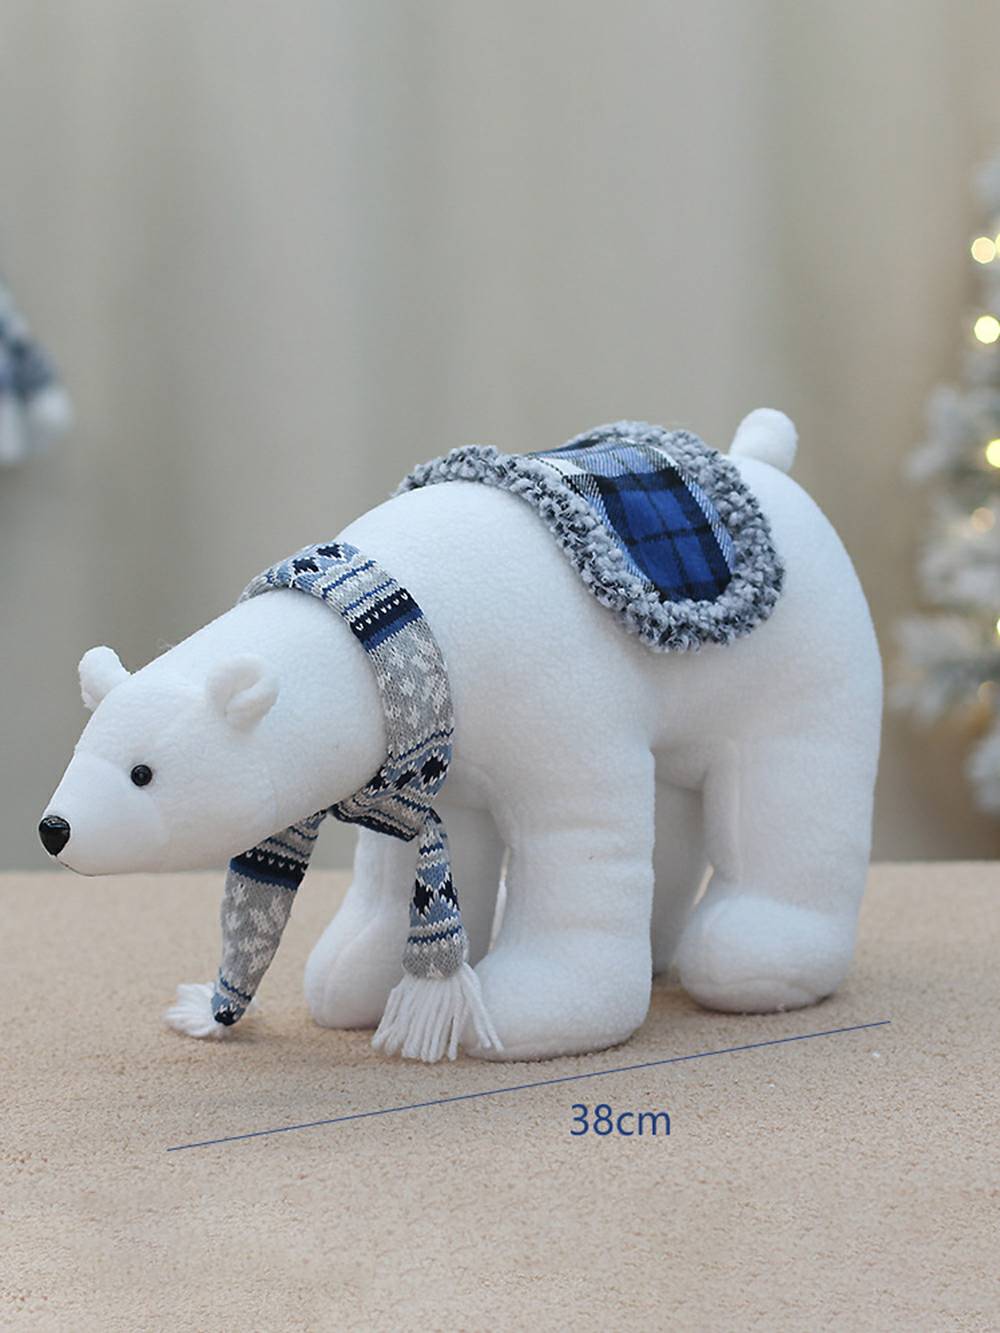 Jul blått stoff isbjørn pingvin dukke ornamenter